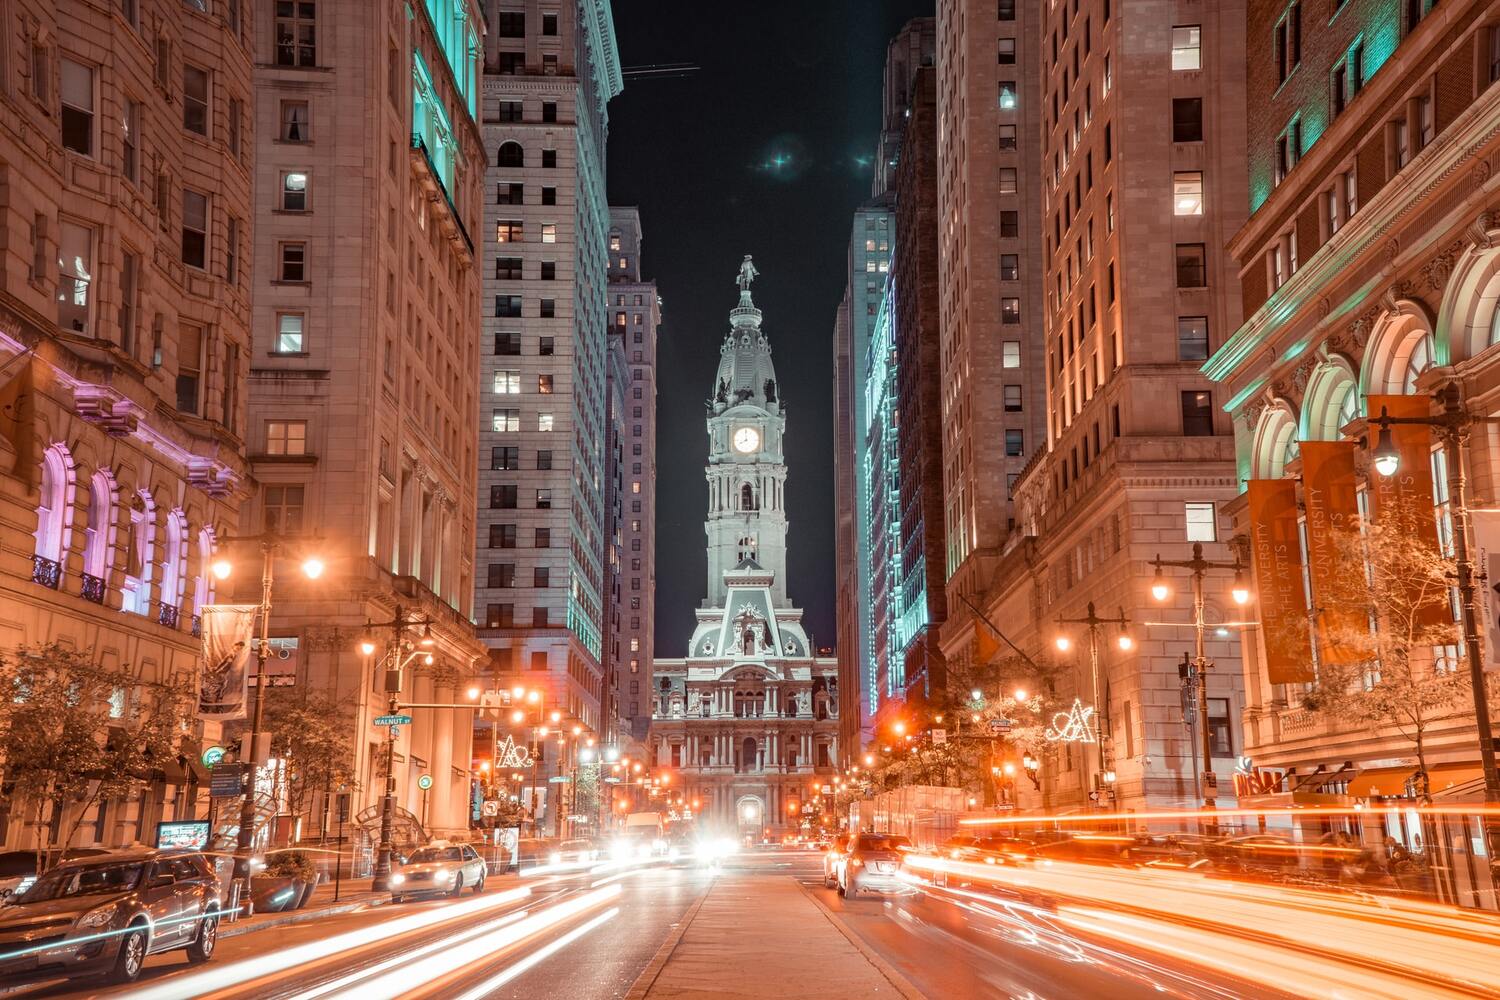 Downtown Philadelphia at night